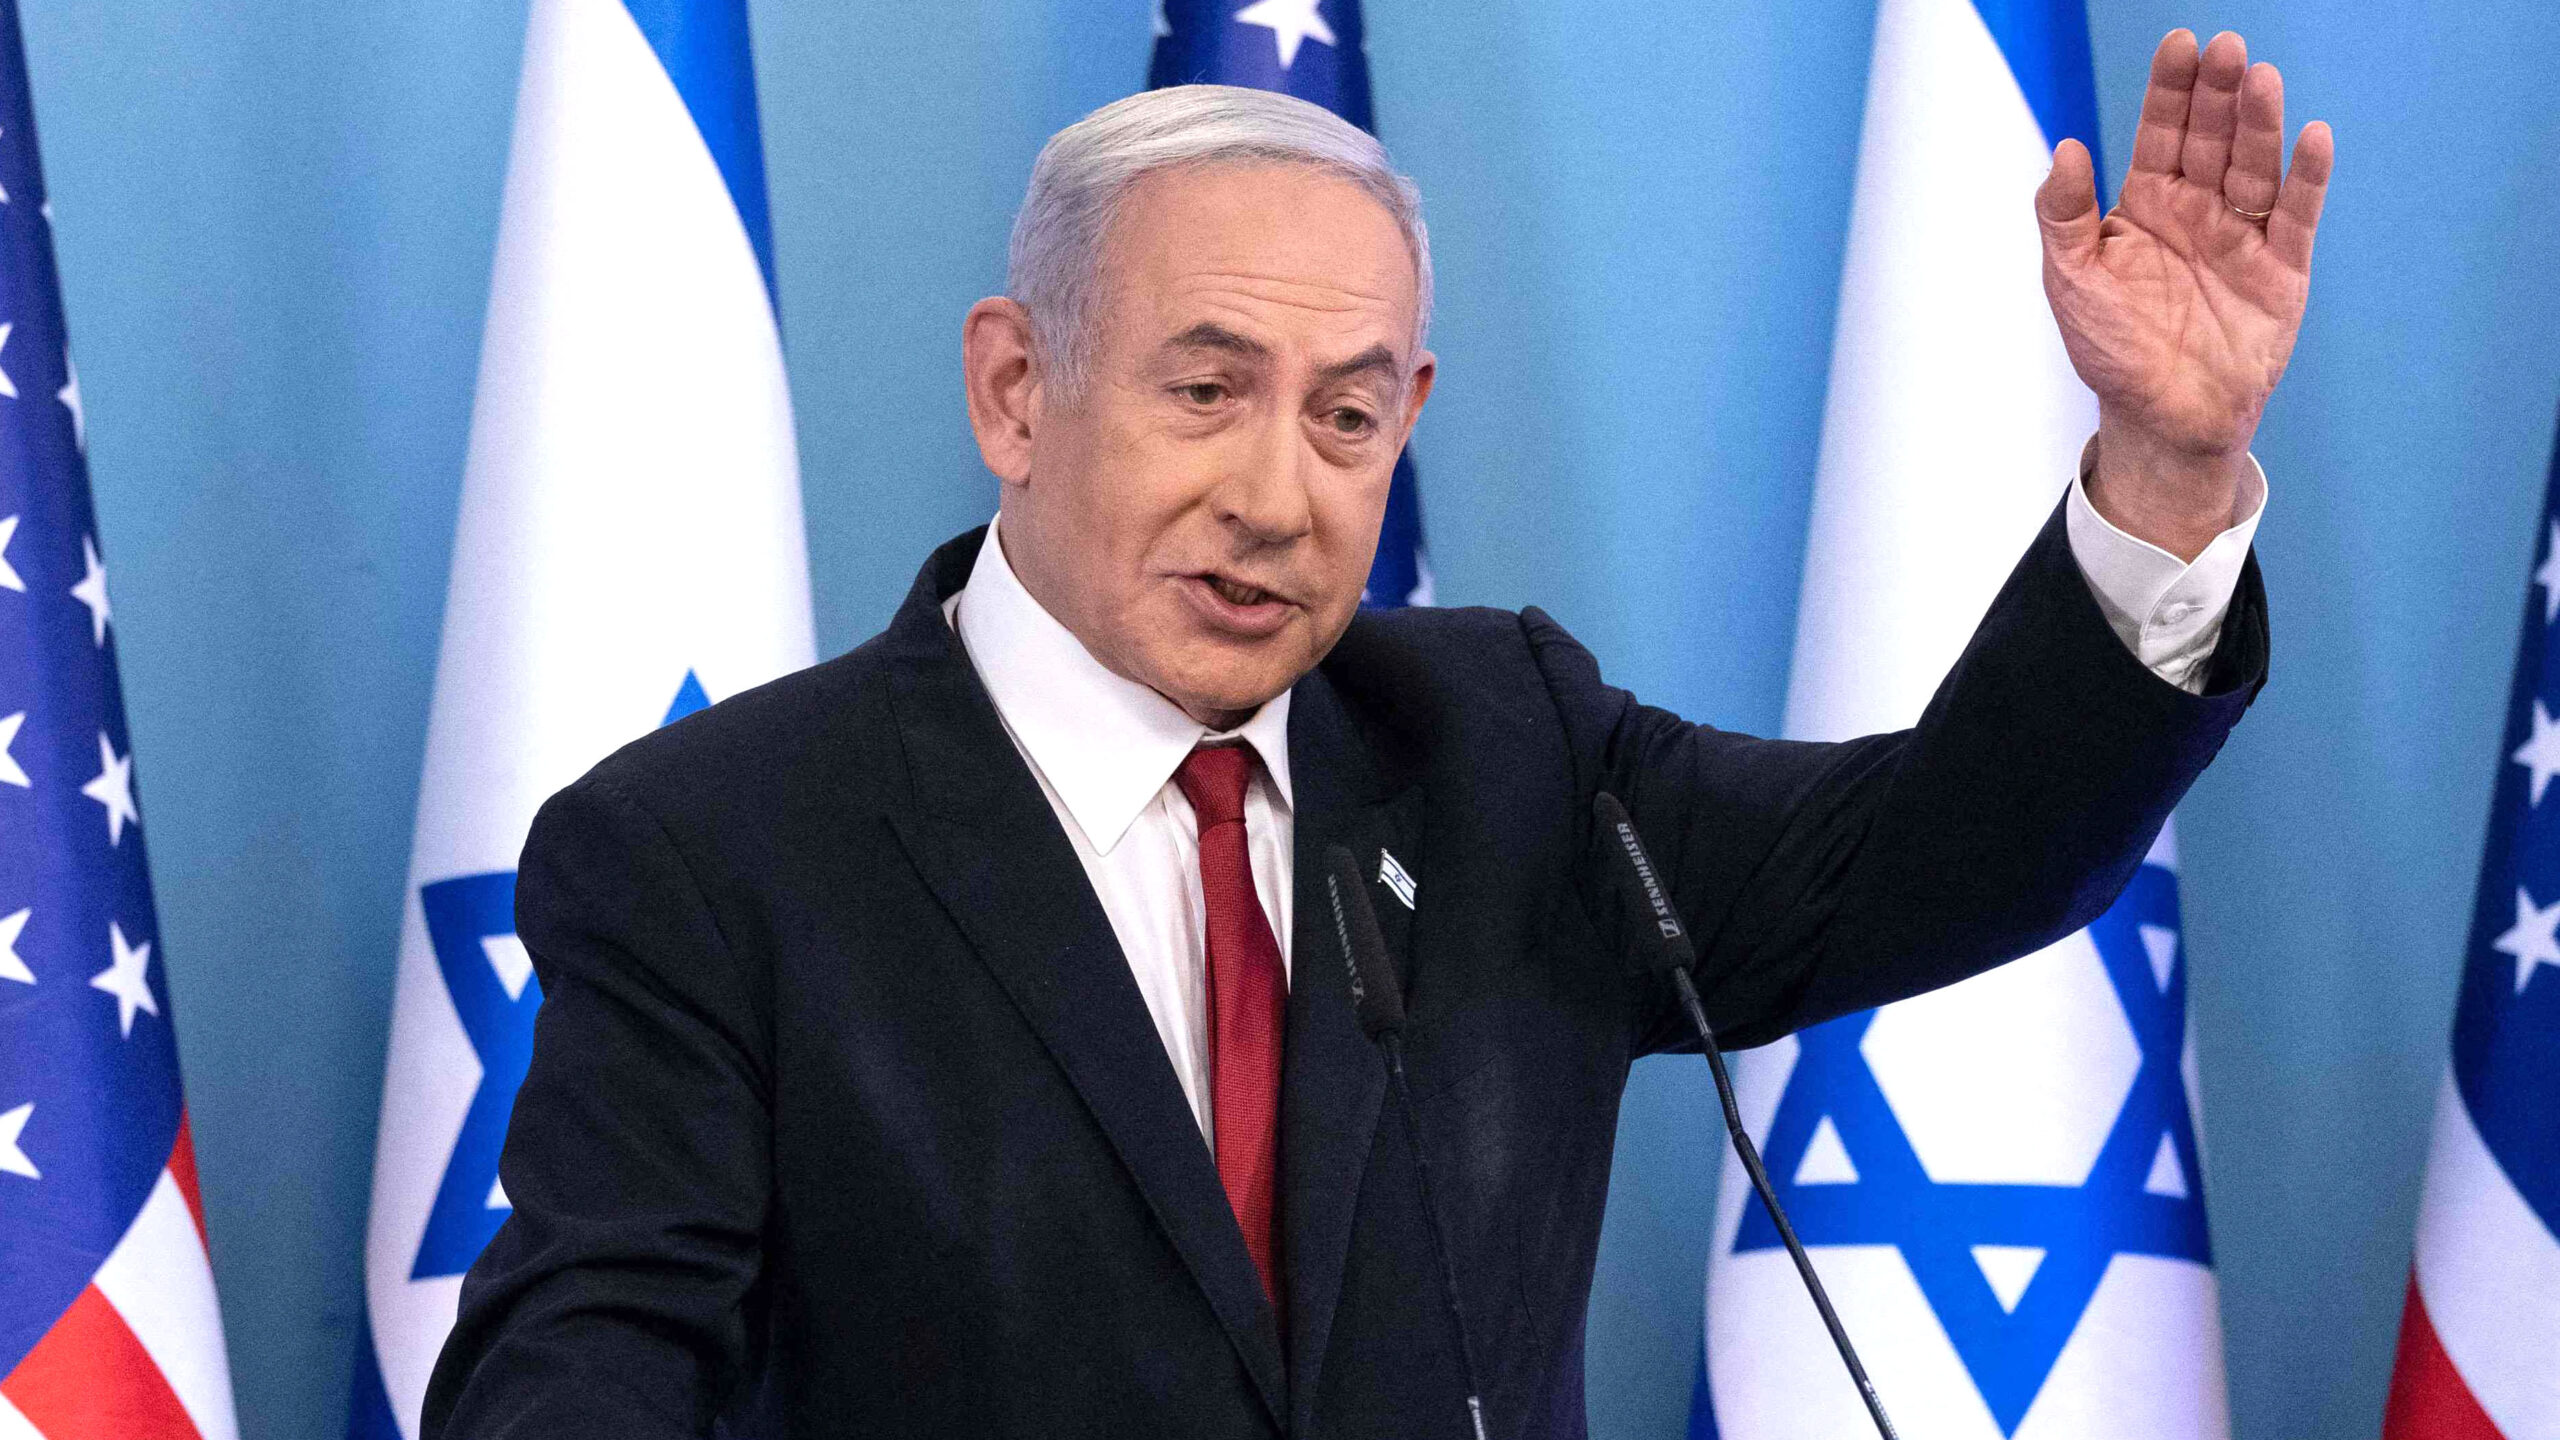 Netanyahu warns Palestinians in Gaza to evacuate as Israel strikes Hamas, vowing to reduce it to ruins.